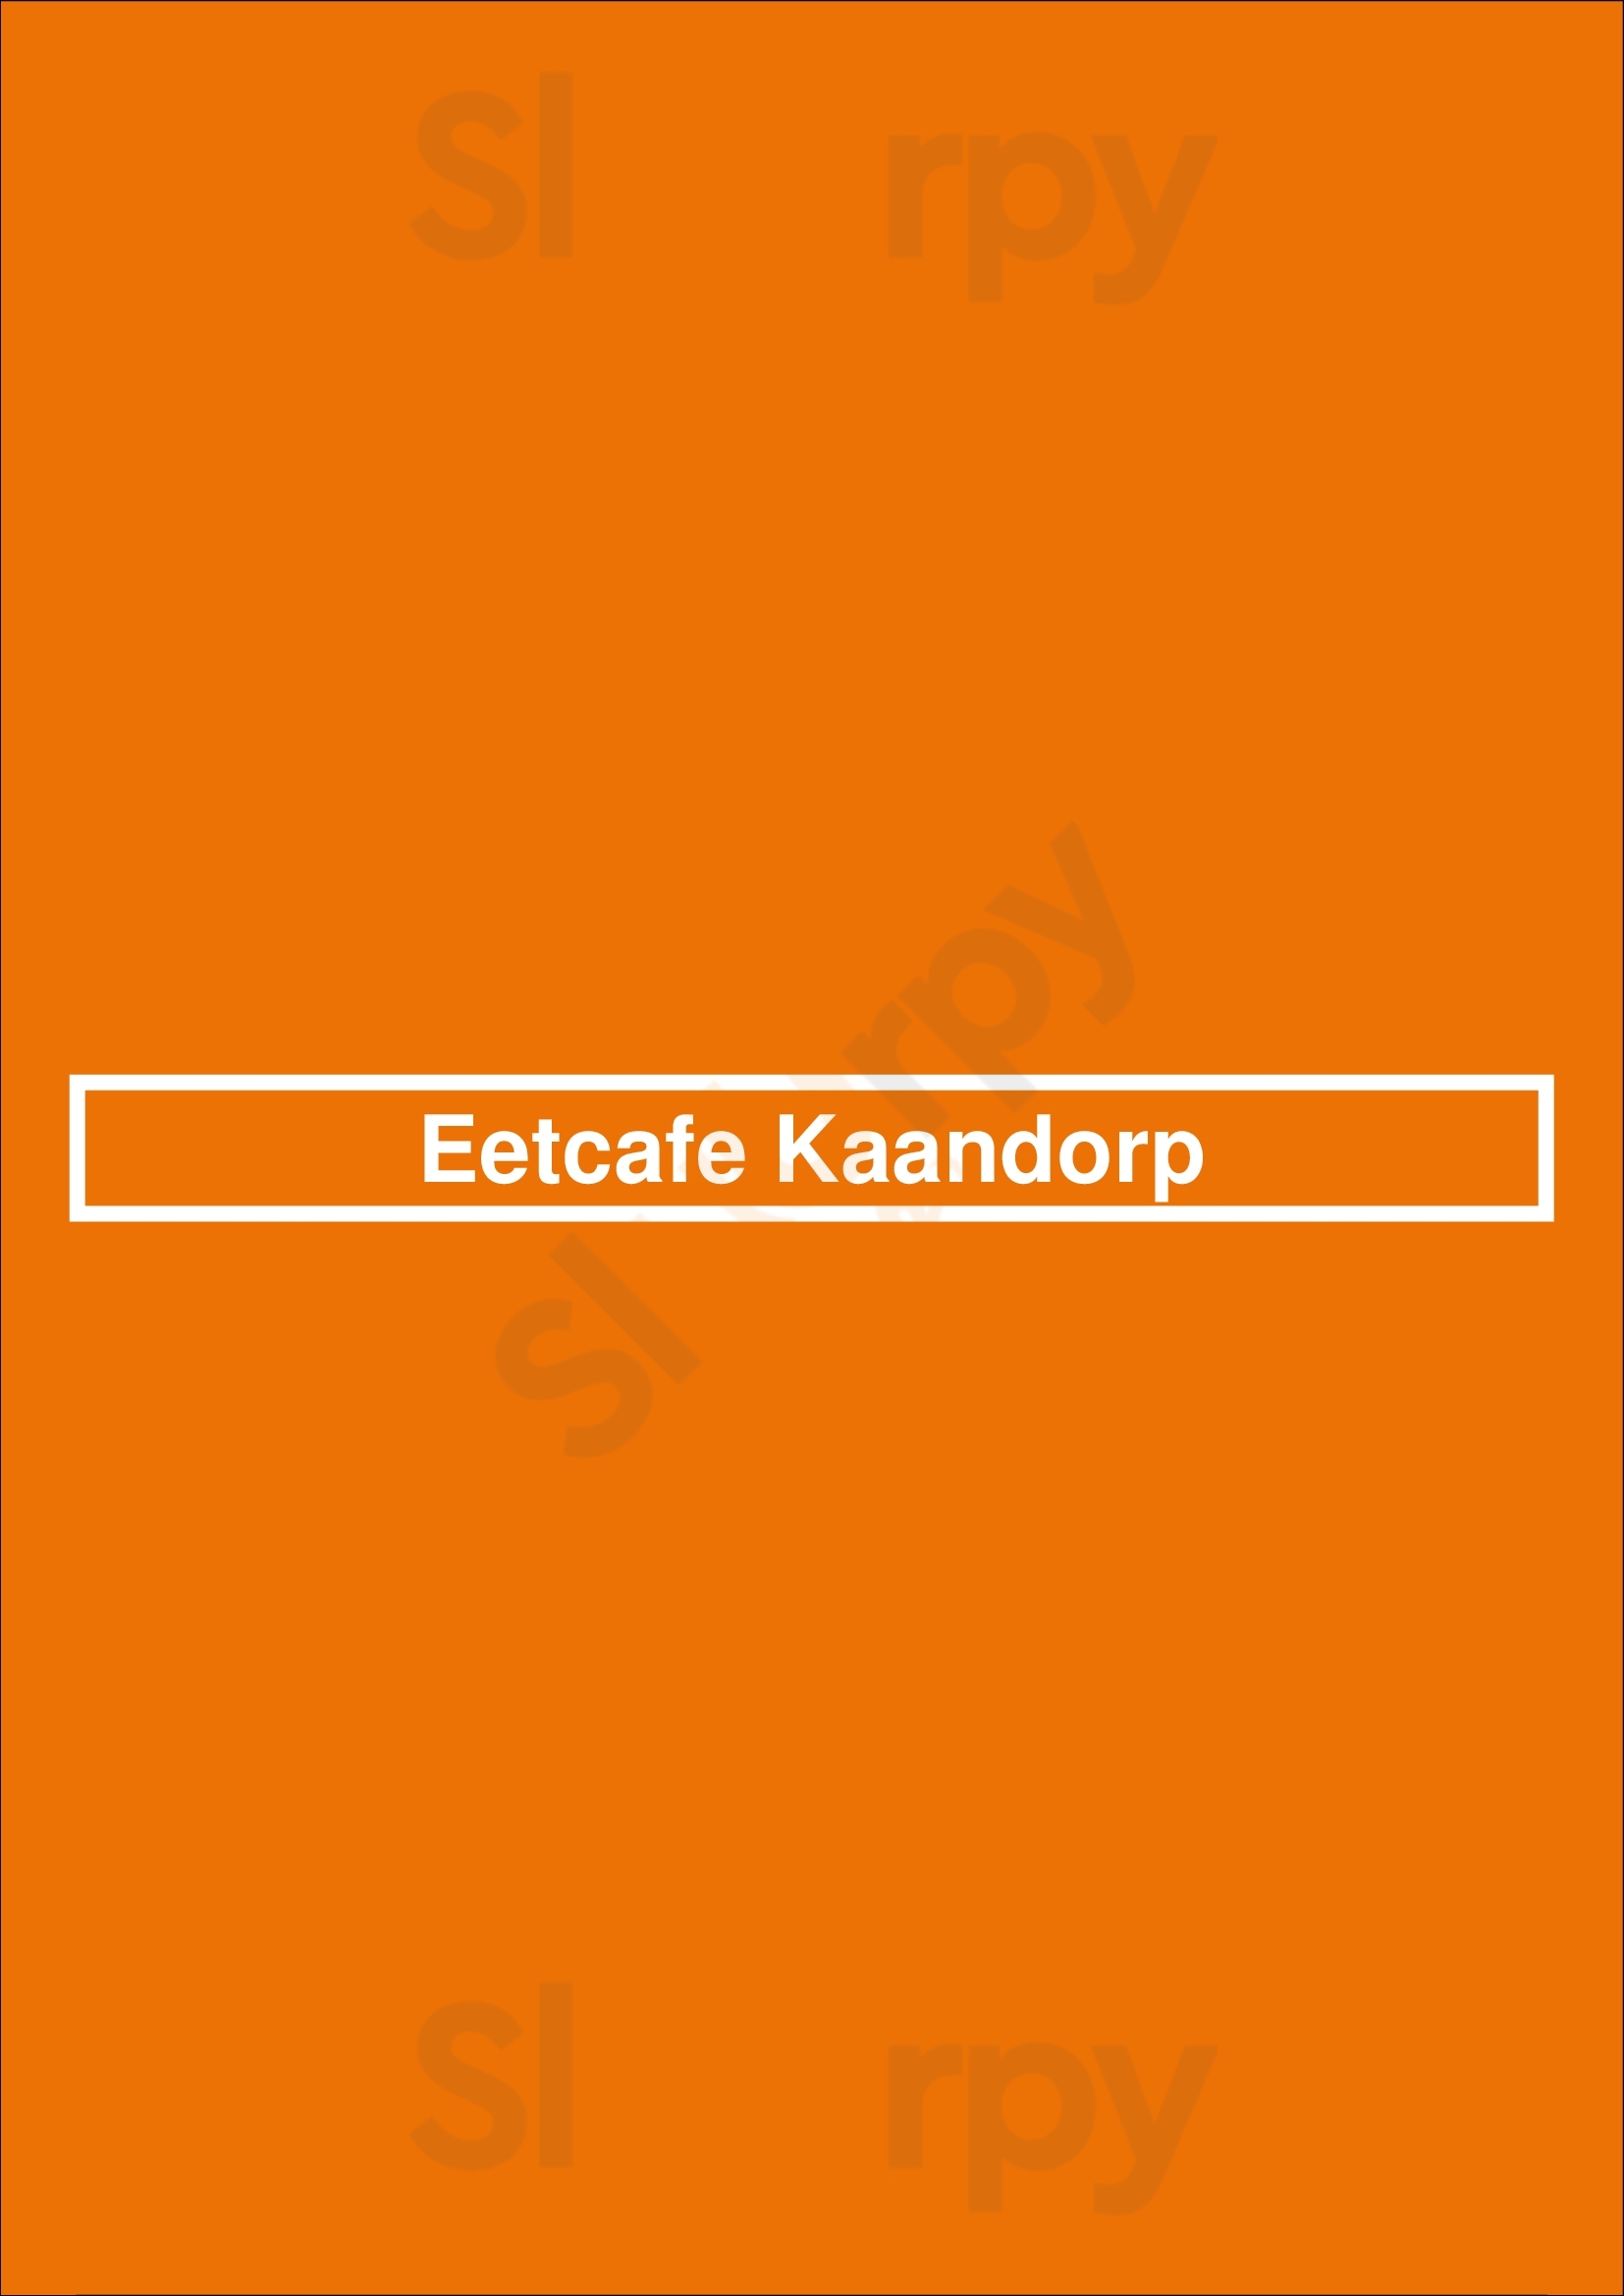 Eetcafe Kaandorp Rotterdam Menu - 1